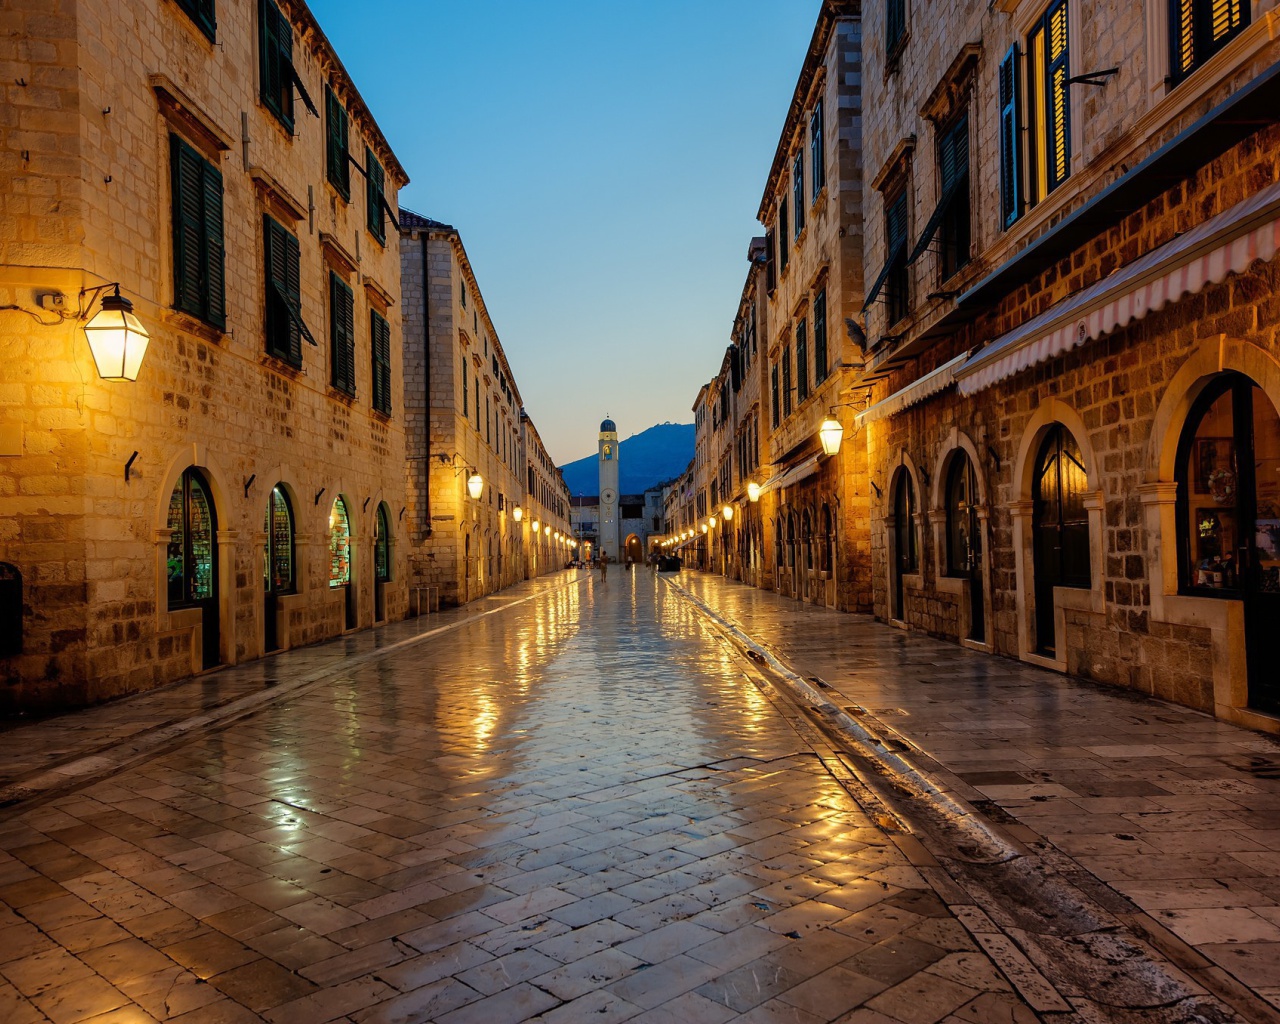 Das Stradun street in Dubrovnik, Croatia Wallpaper 1280x1024